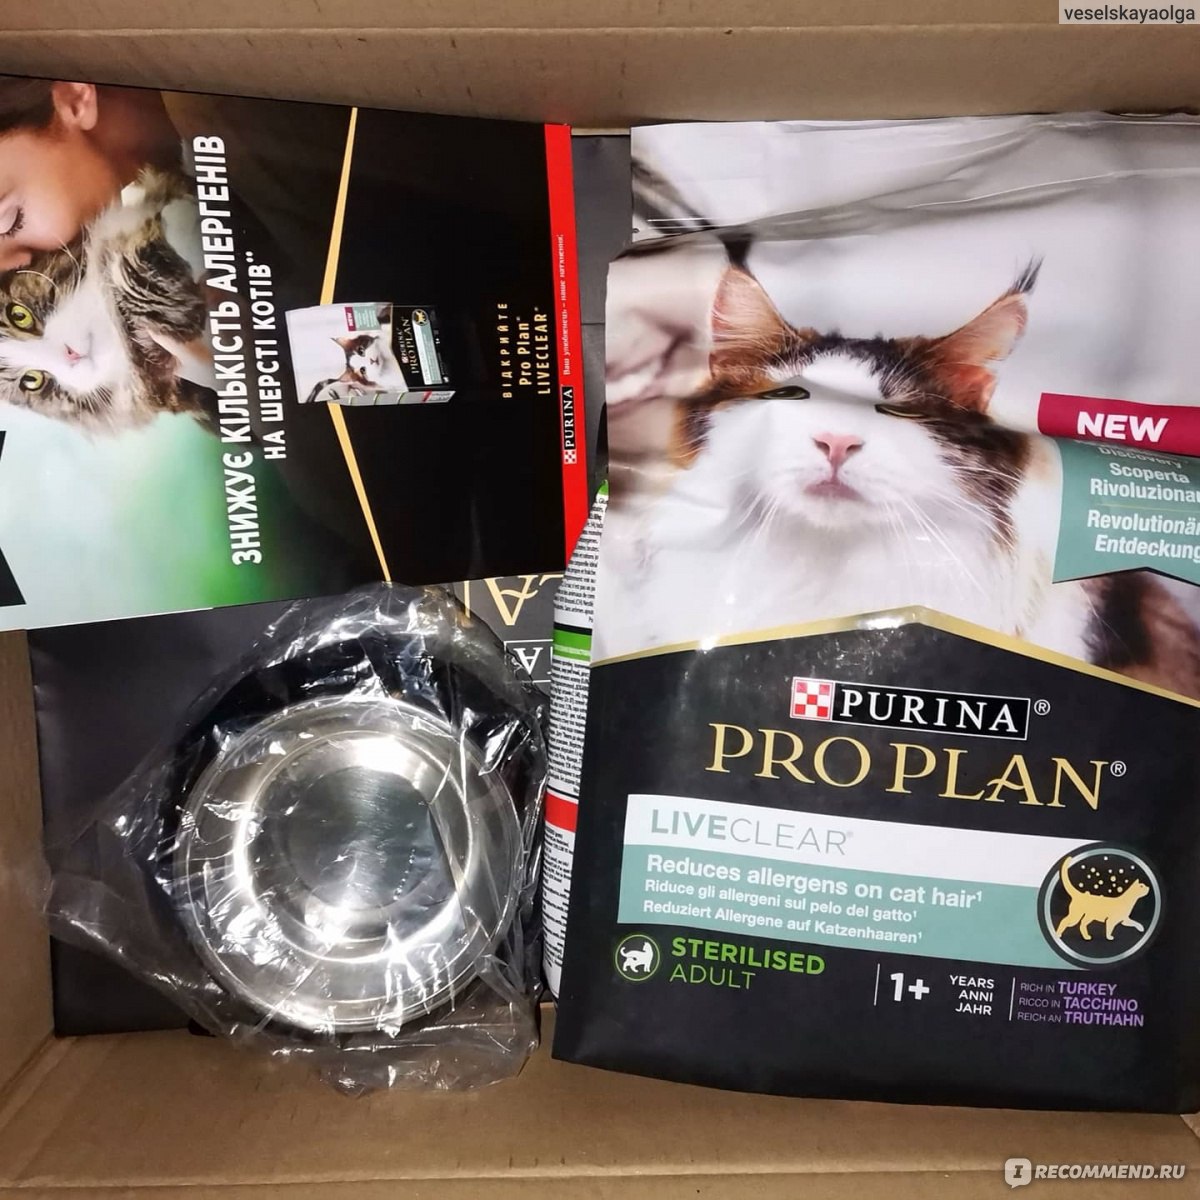 Pro plan liveclear стерилизованных. Purina liveclear для кошек. Корм для кошек Pro Plan liveclear. Purina Live Clear для котят. Pro Plan Live Clear для котят.